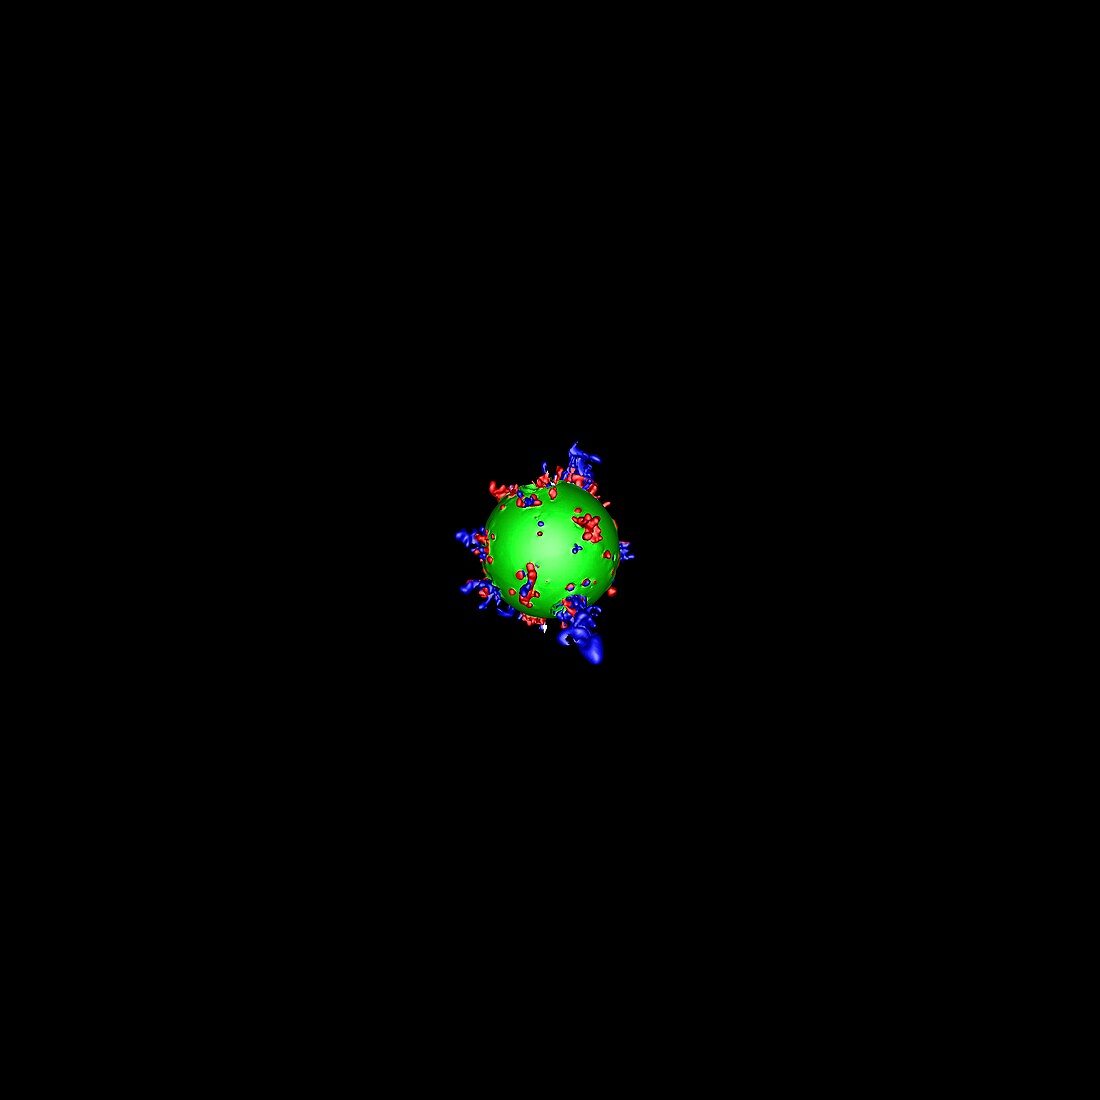 Supernova explosion,3D simulation